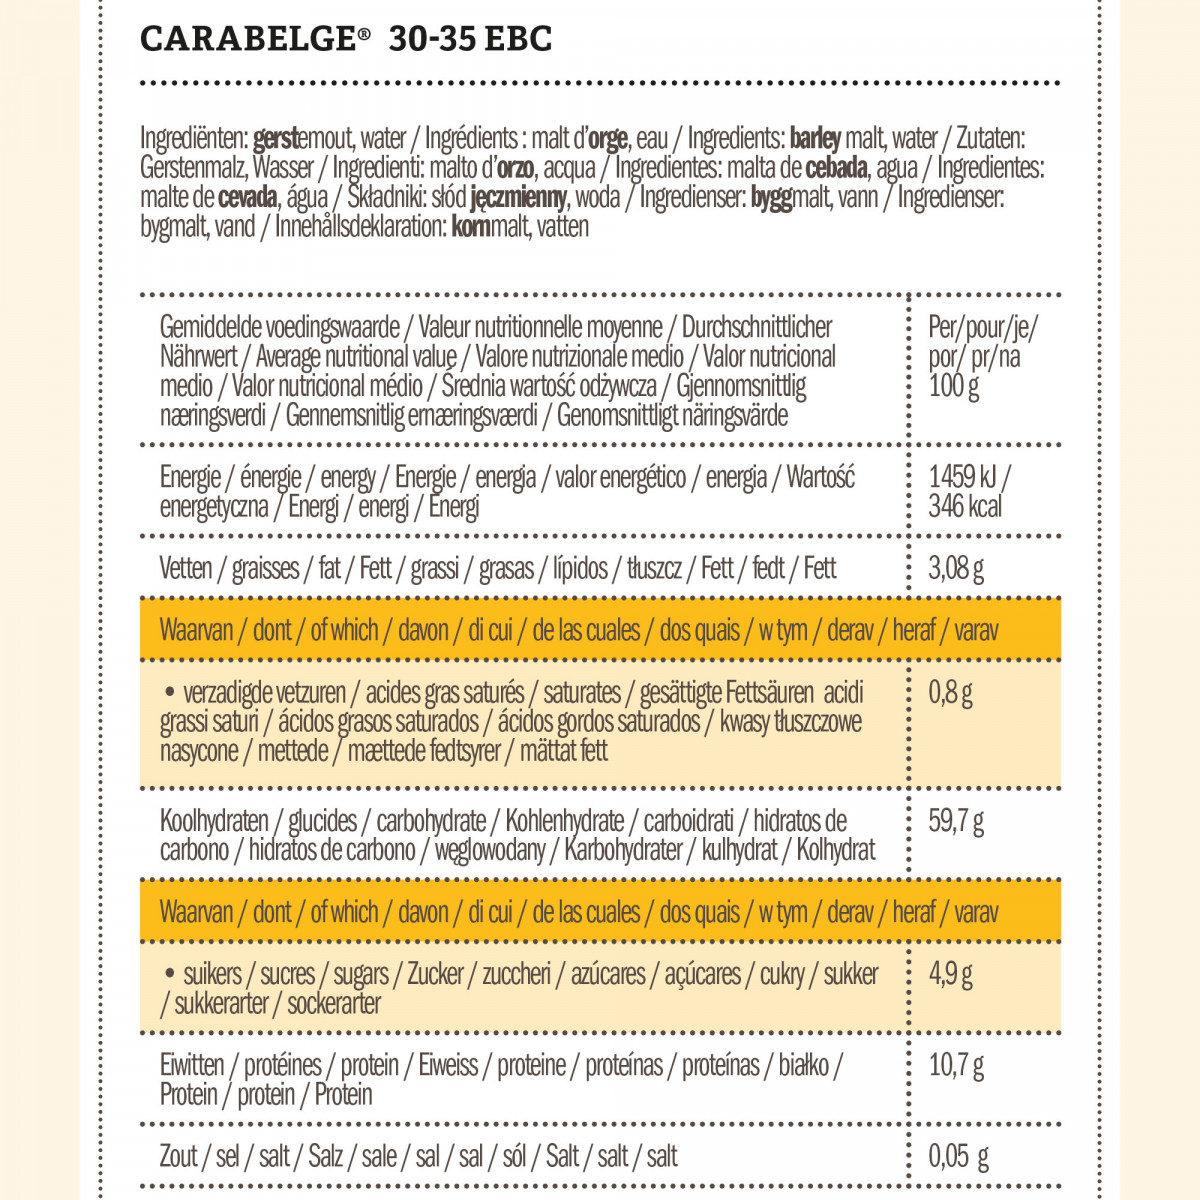 Weyermann® CaraBelge® 30-35 EBC 1 kg